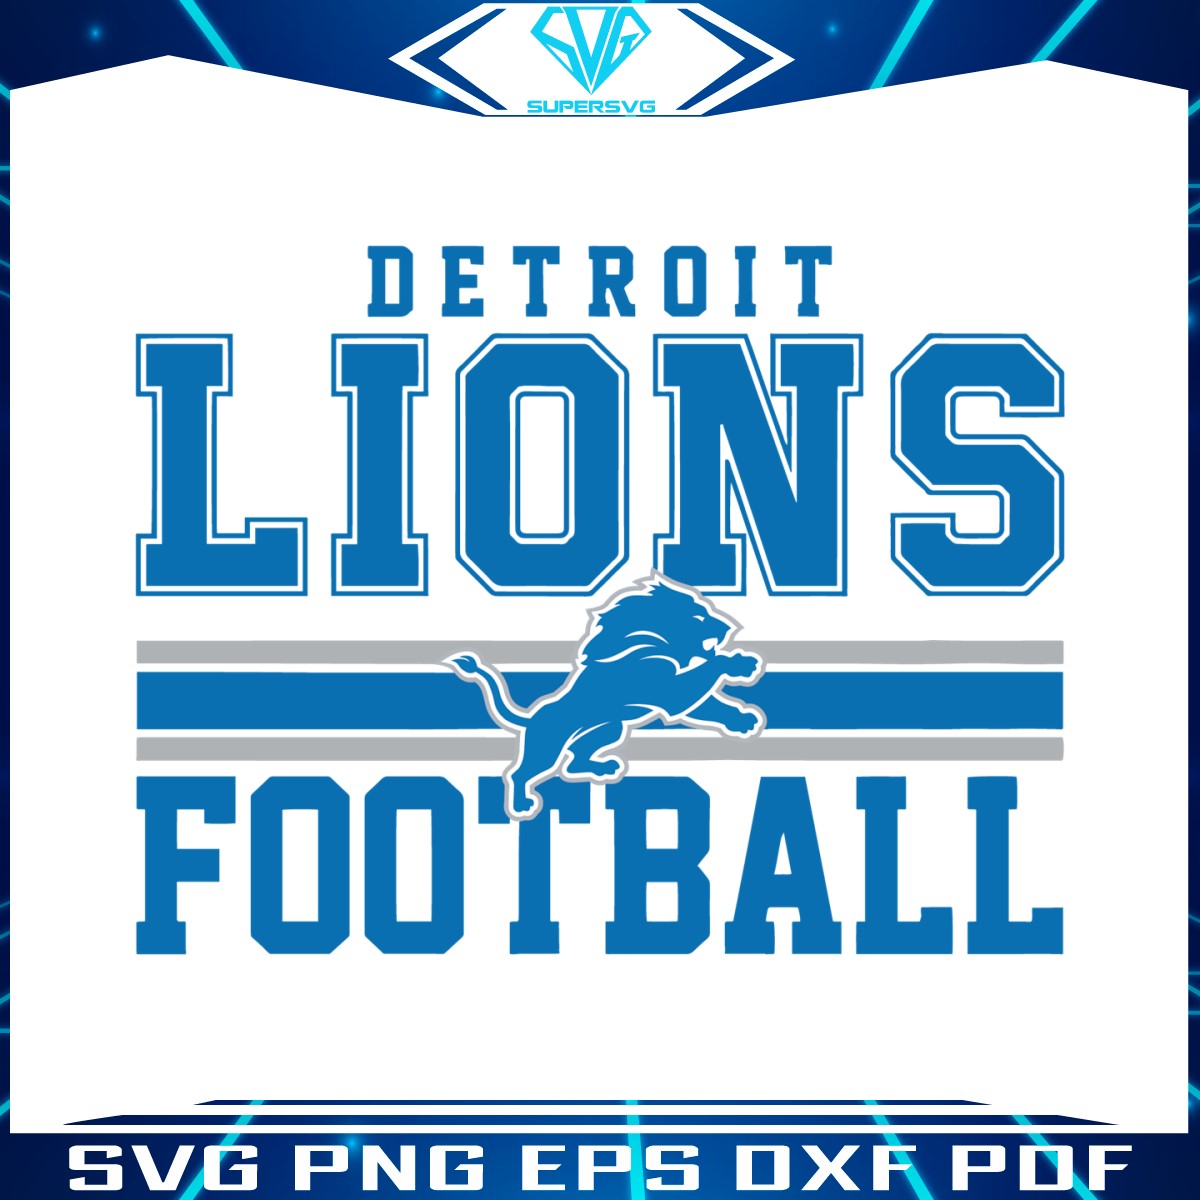 retro-detroit-lions-football-mascot-logo-svg